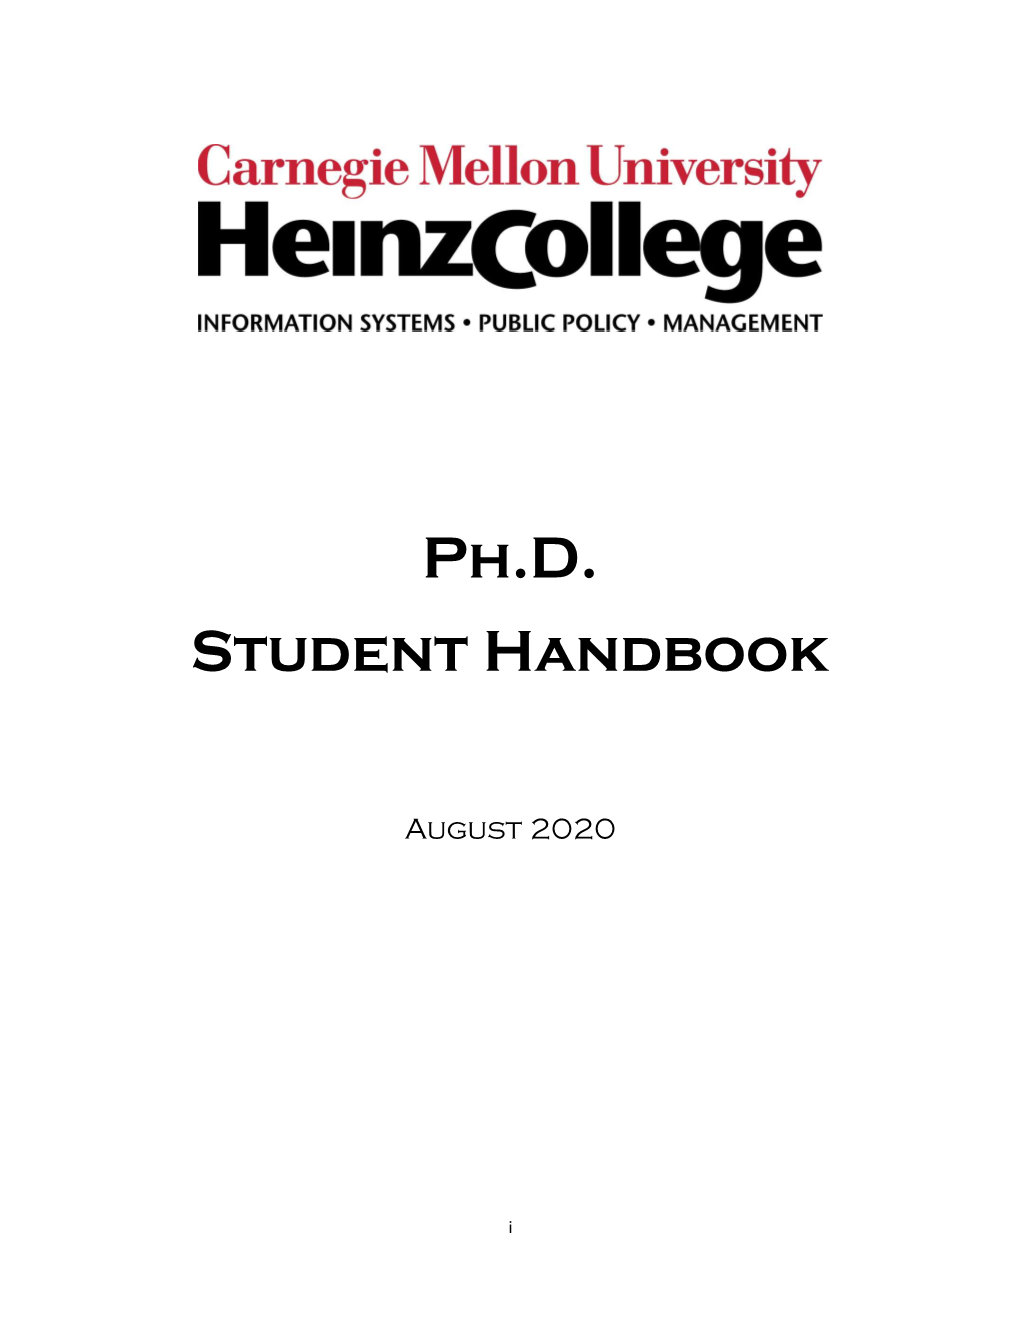 Ph.D. Student Handbook